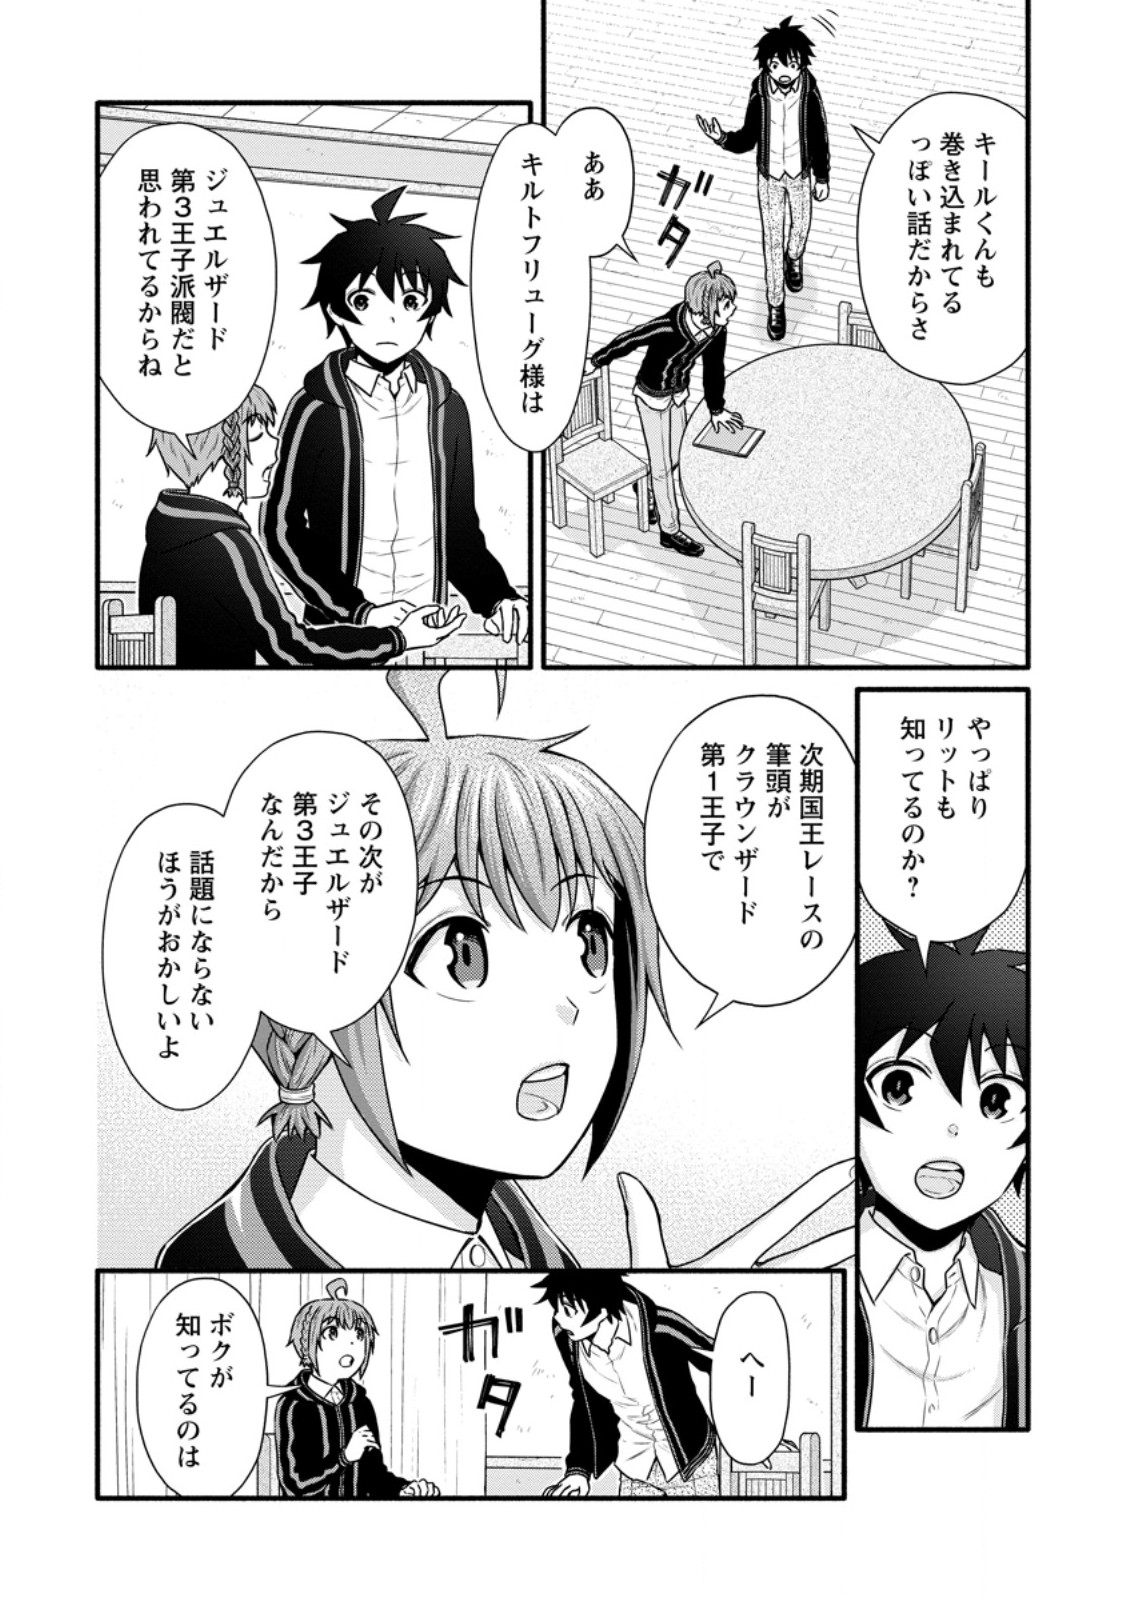 Gakuen Kishi no Level Up! - Chapter 39.1 - Page 2